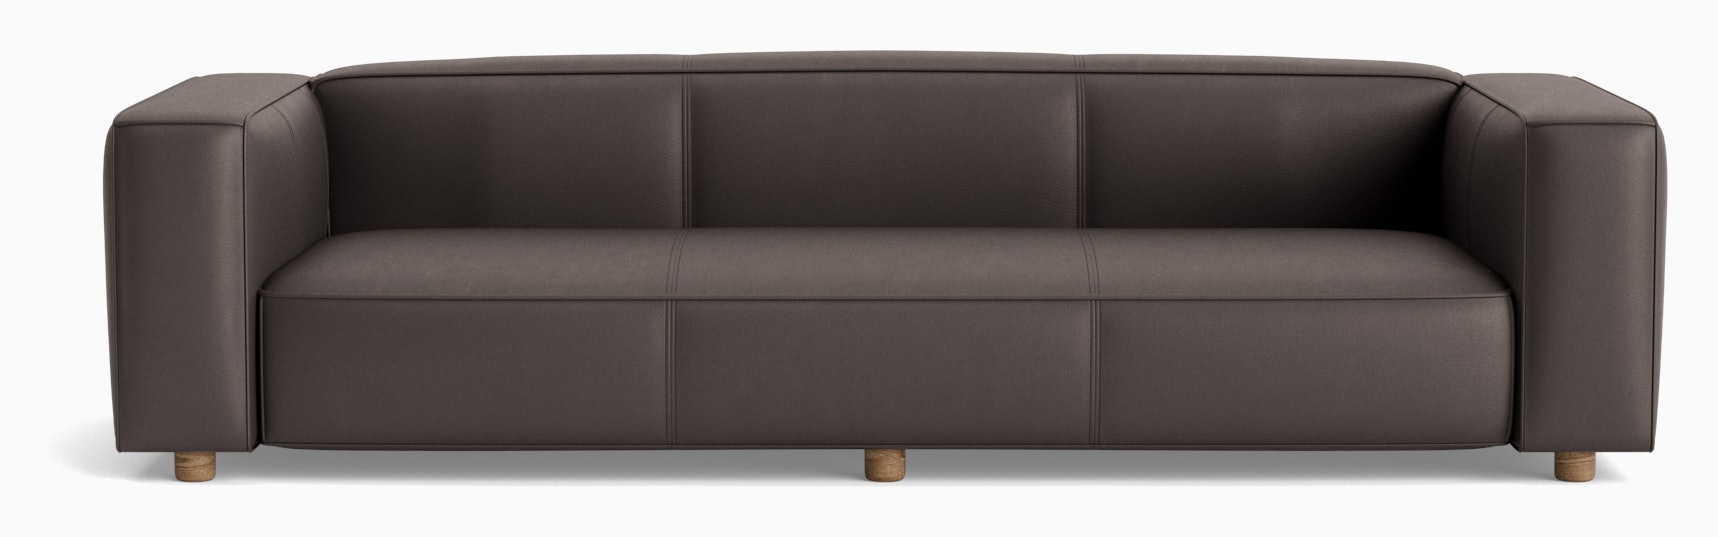 jaxon leather press back recliner sofa